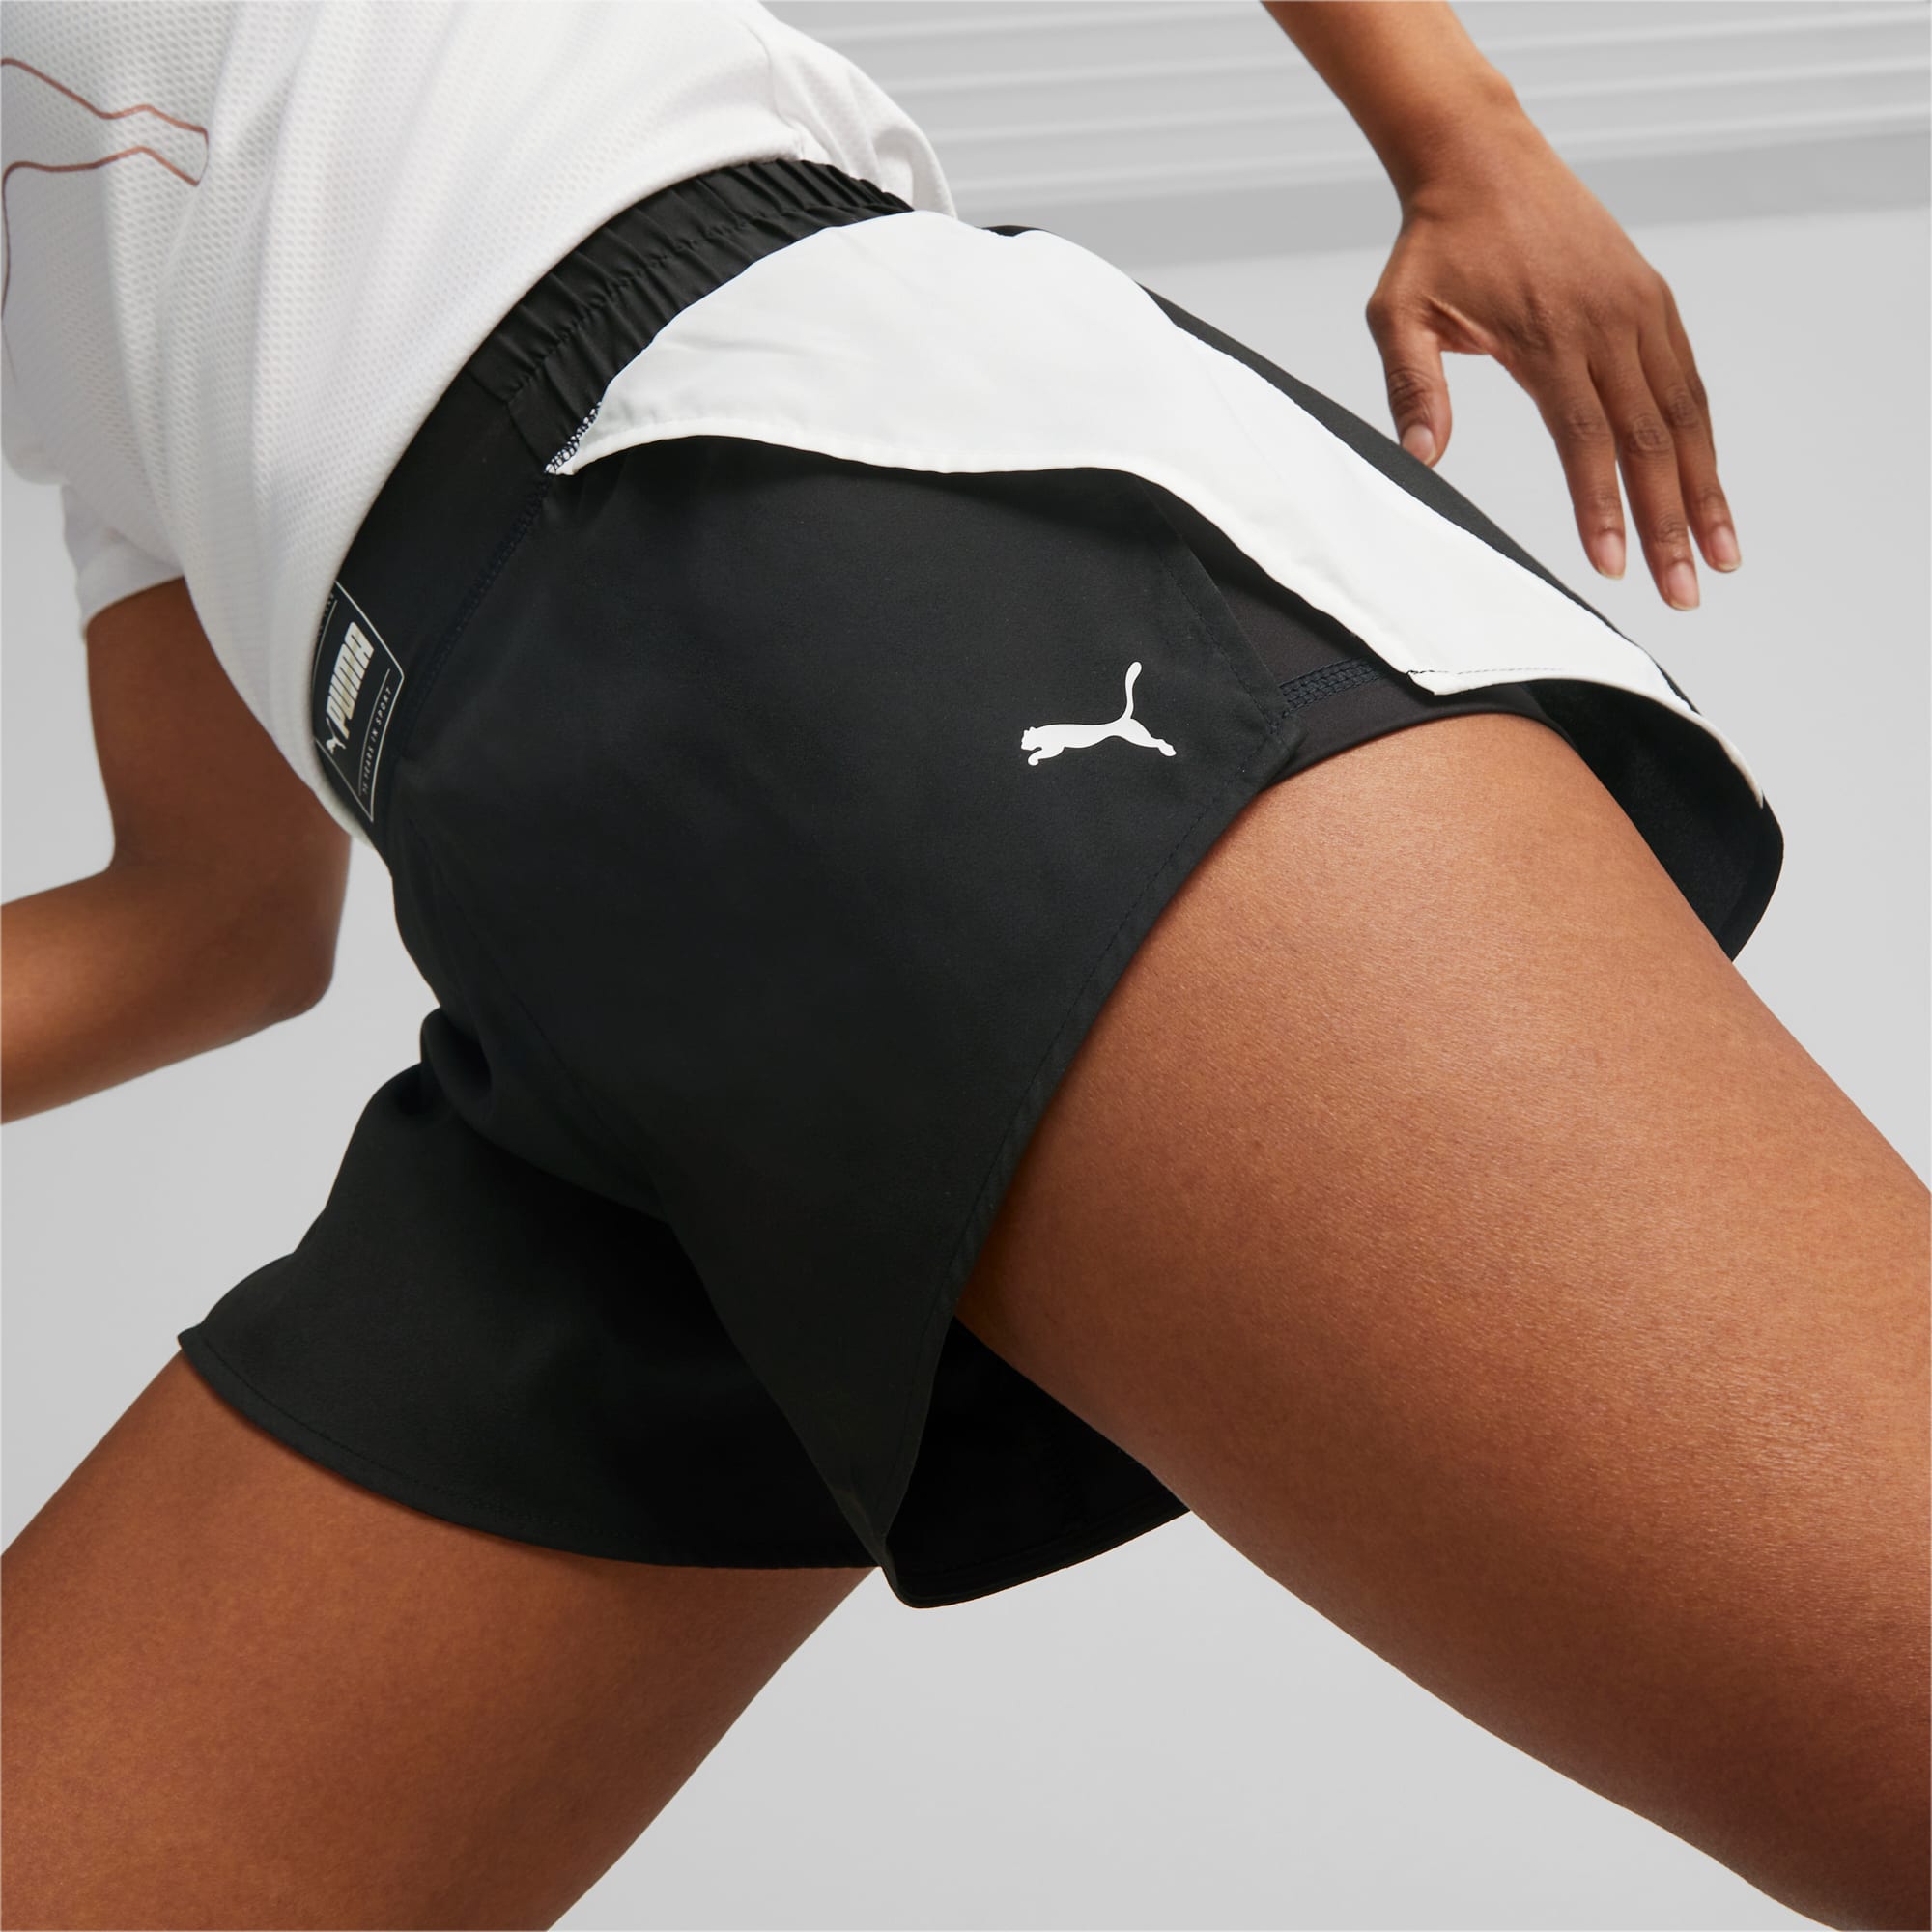 PUMA Solid Women Black Sports Shorts - Buy PUMA Solid Women Black